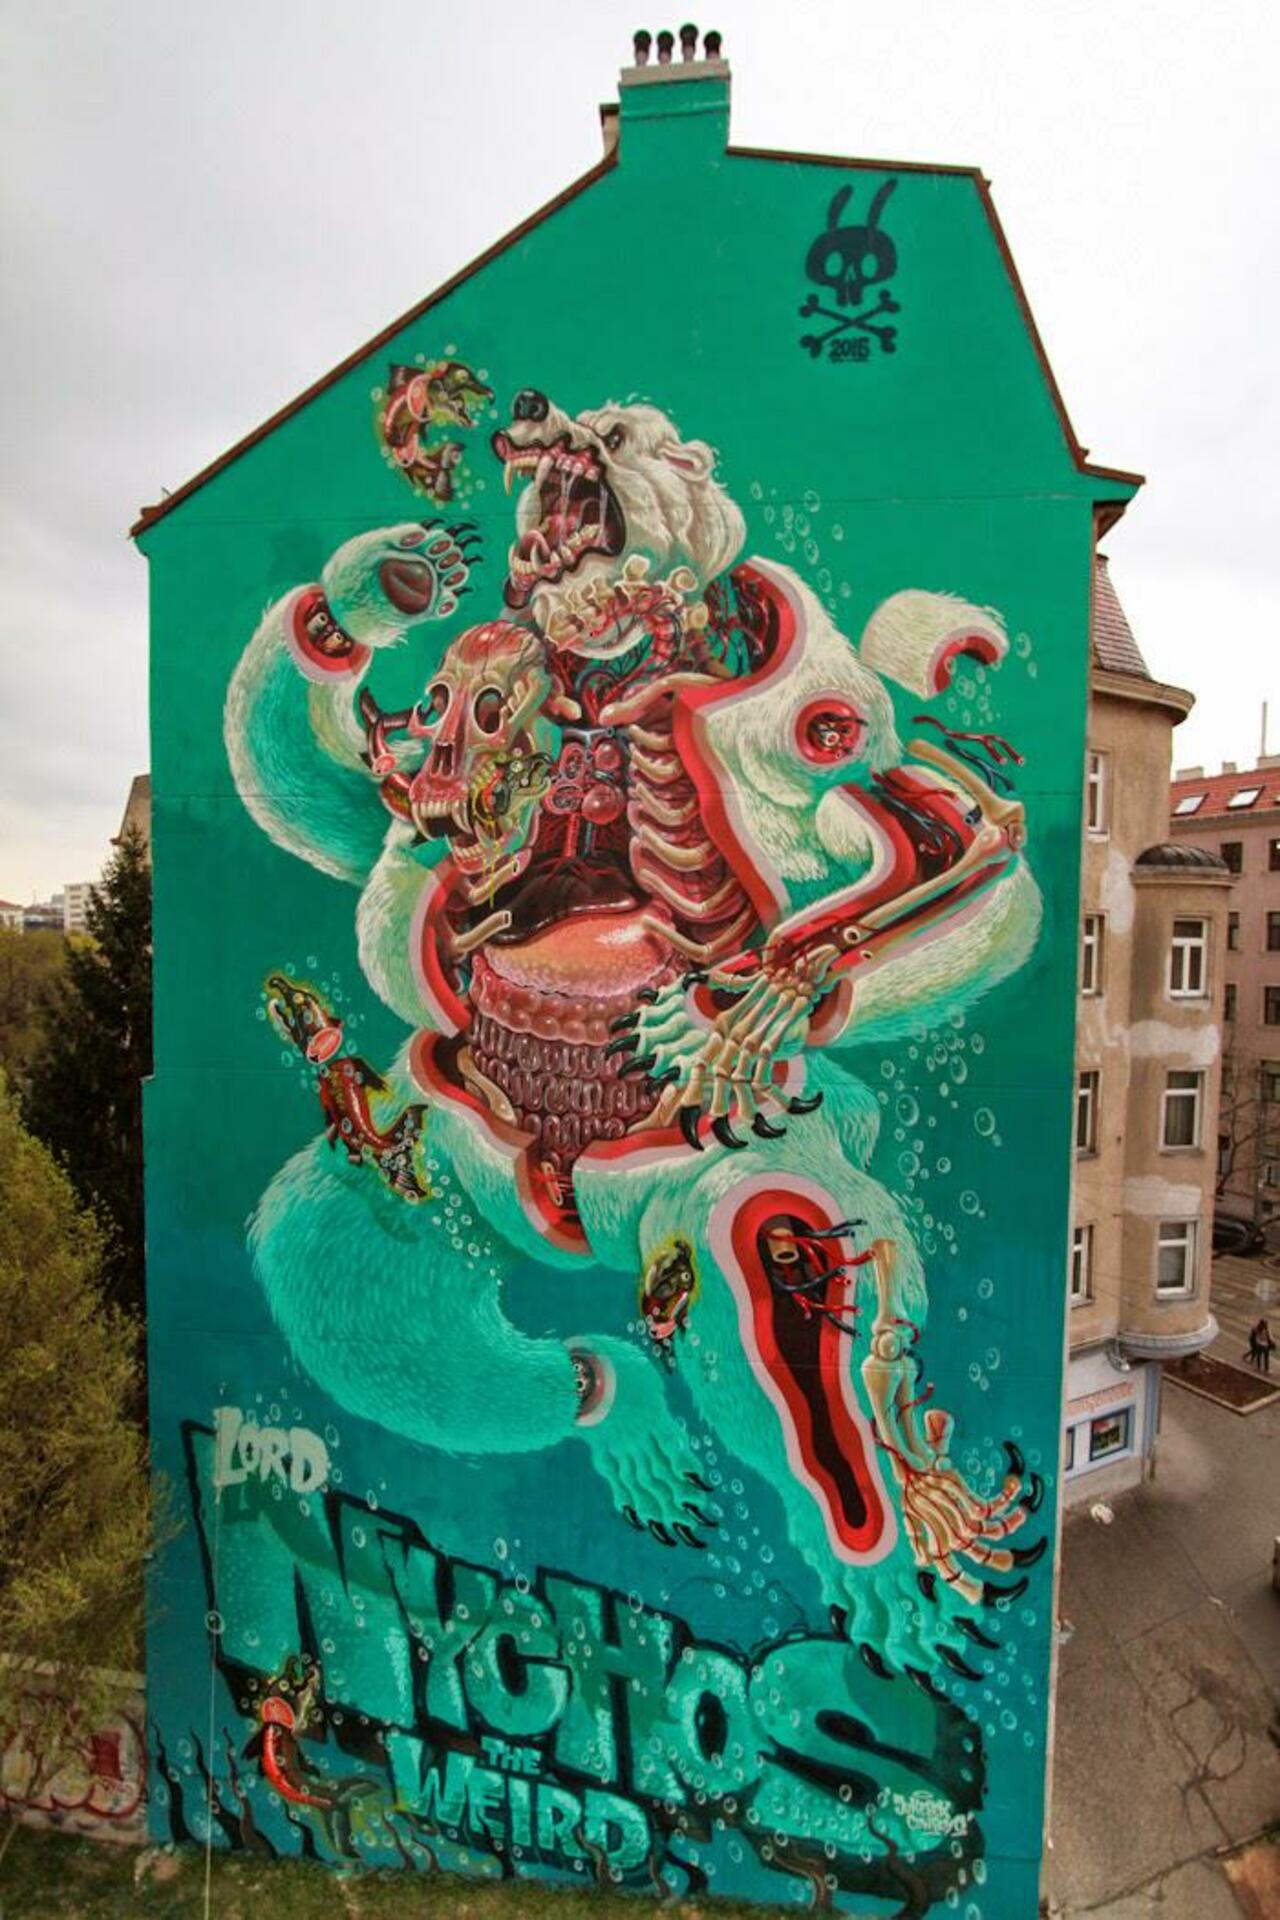 RT @relakxoverdoose: #Nychos the Weird" #graffiti  ! #mural #streetart http://t.co/cKixaoOLiT